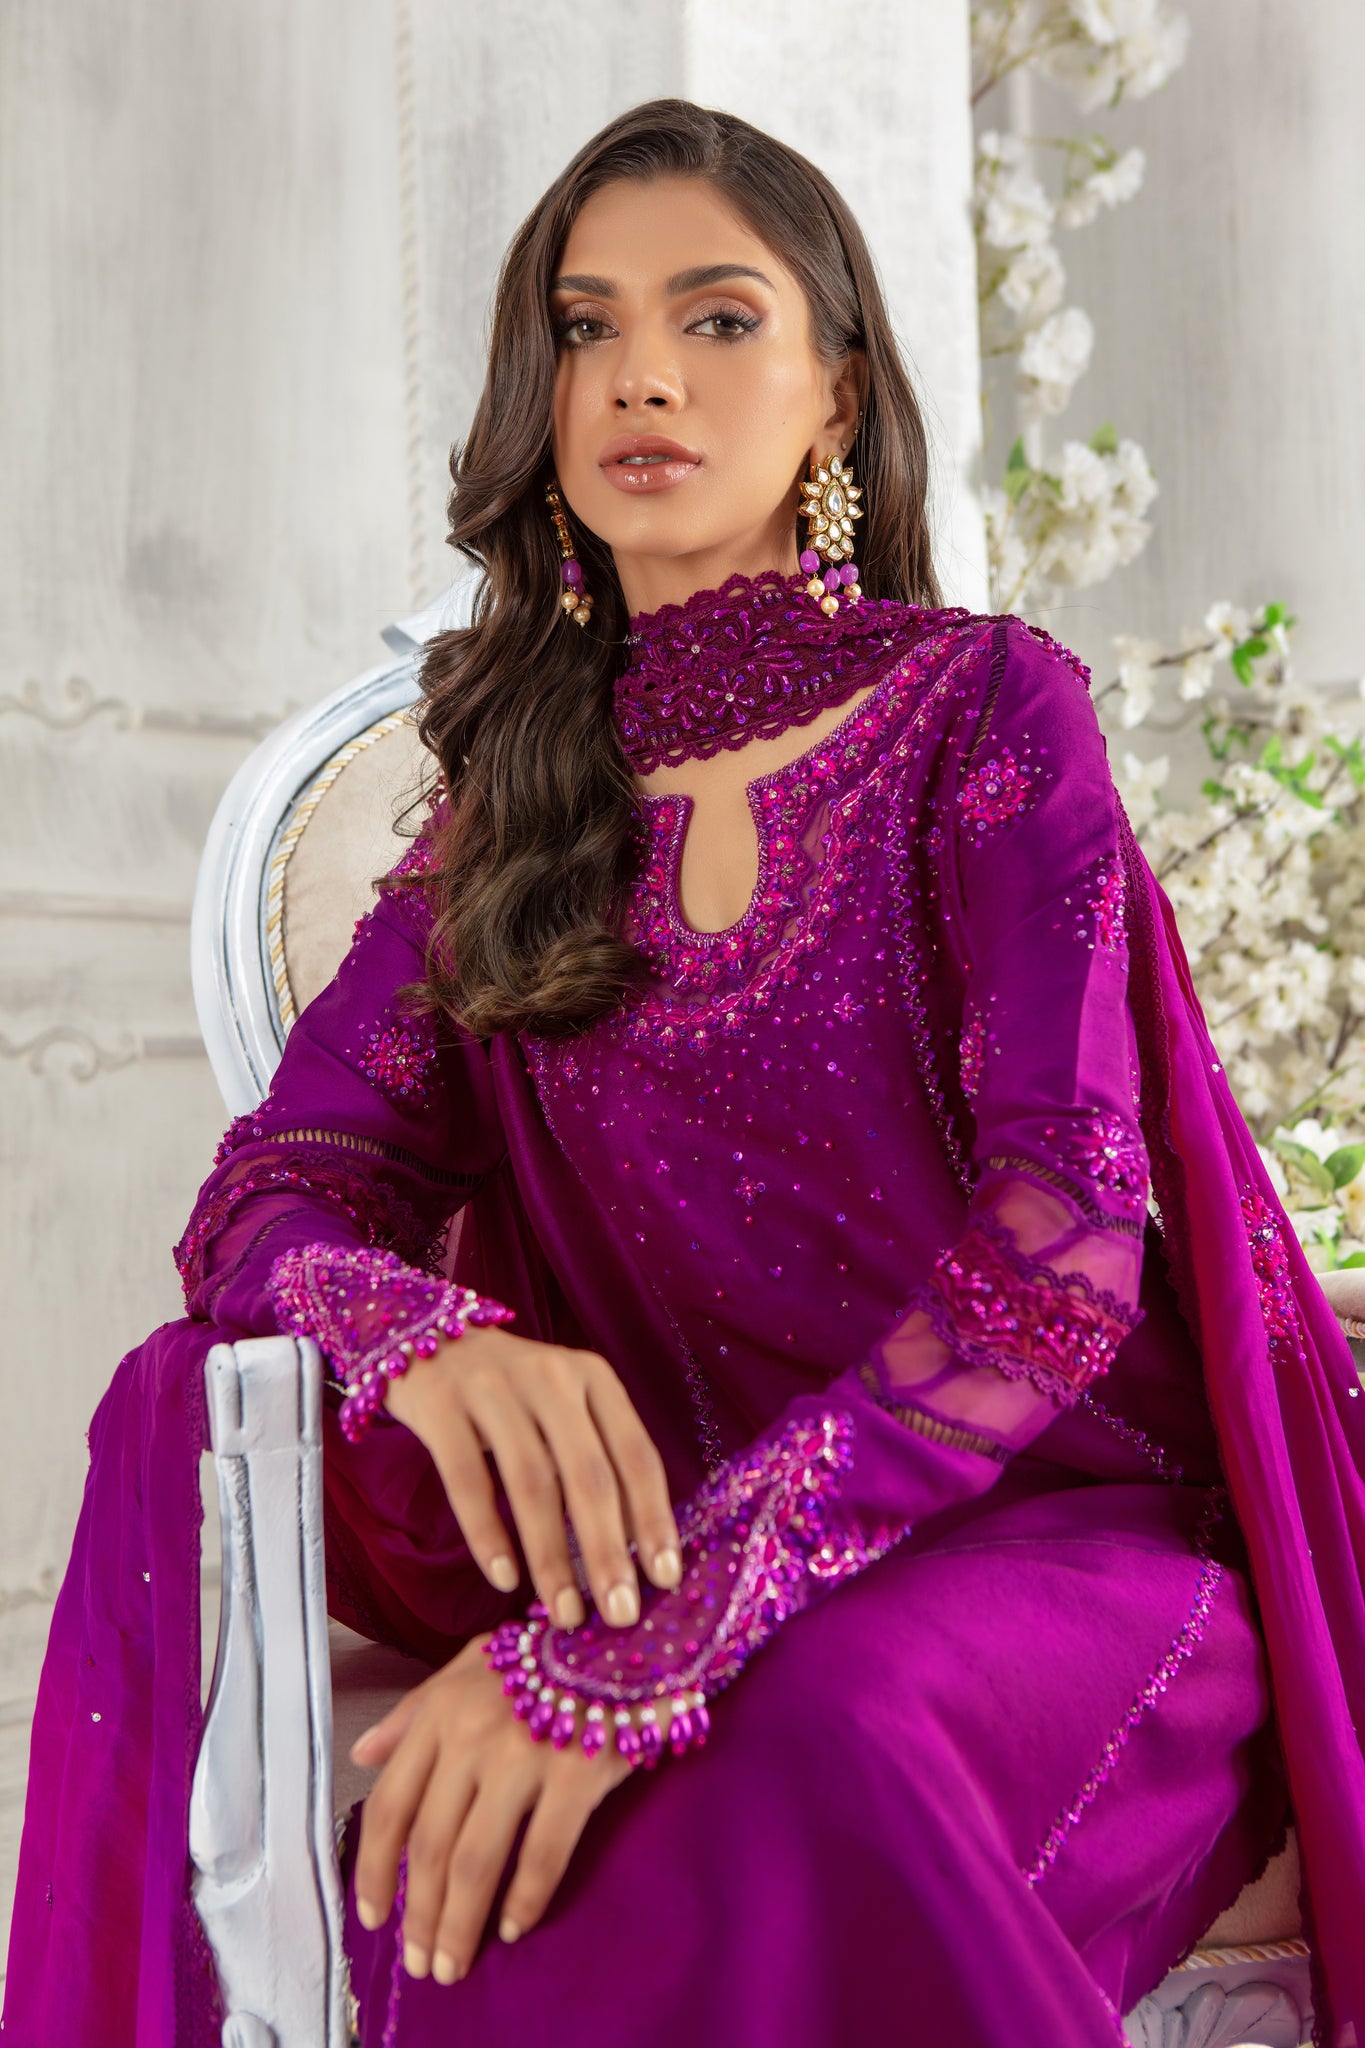 Rosette | Pakistani Designer Outfit | Sarosh Salman